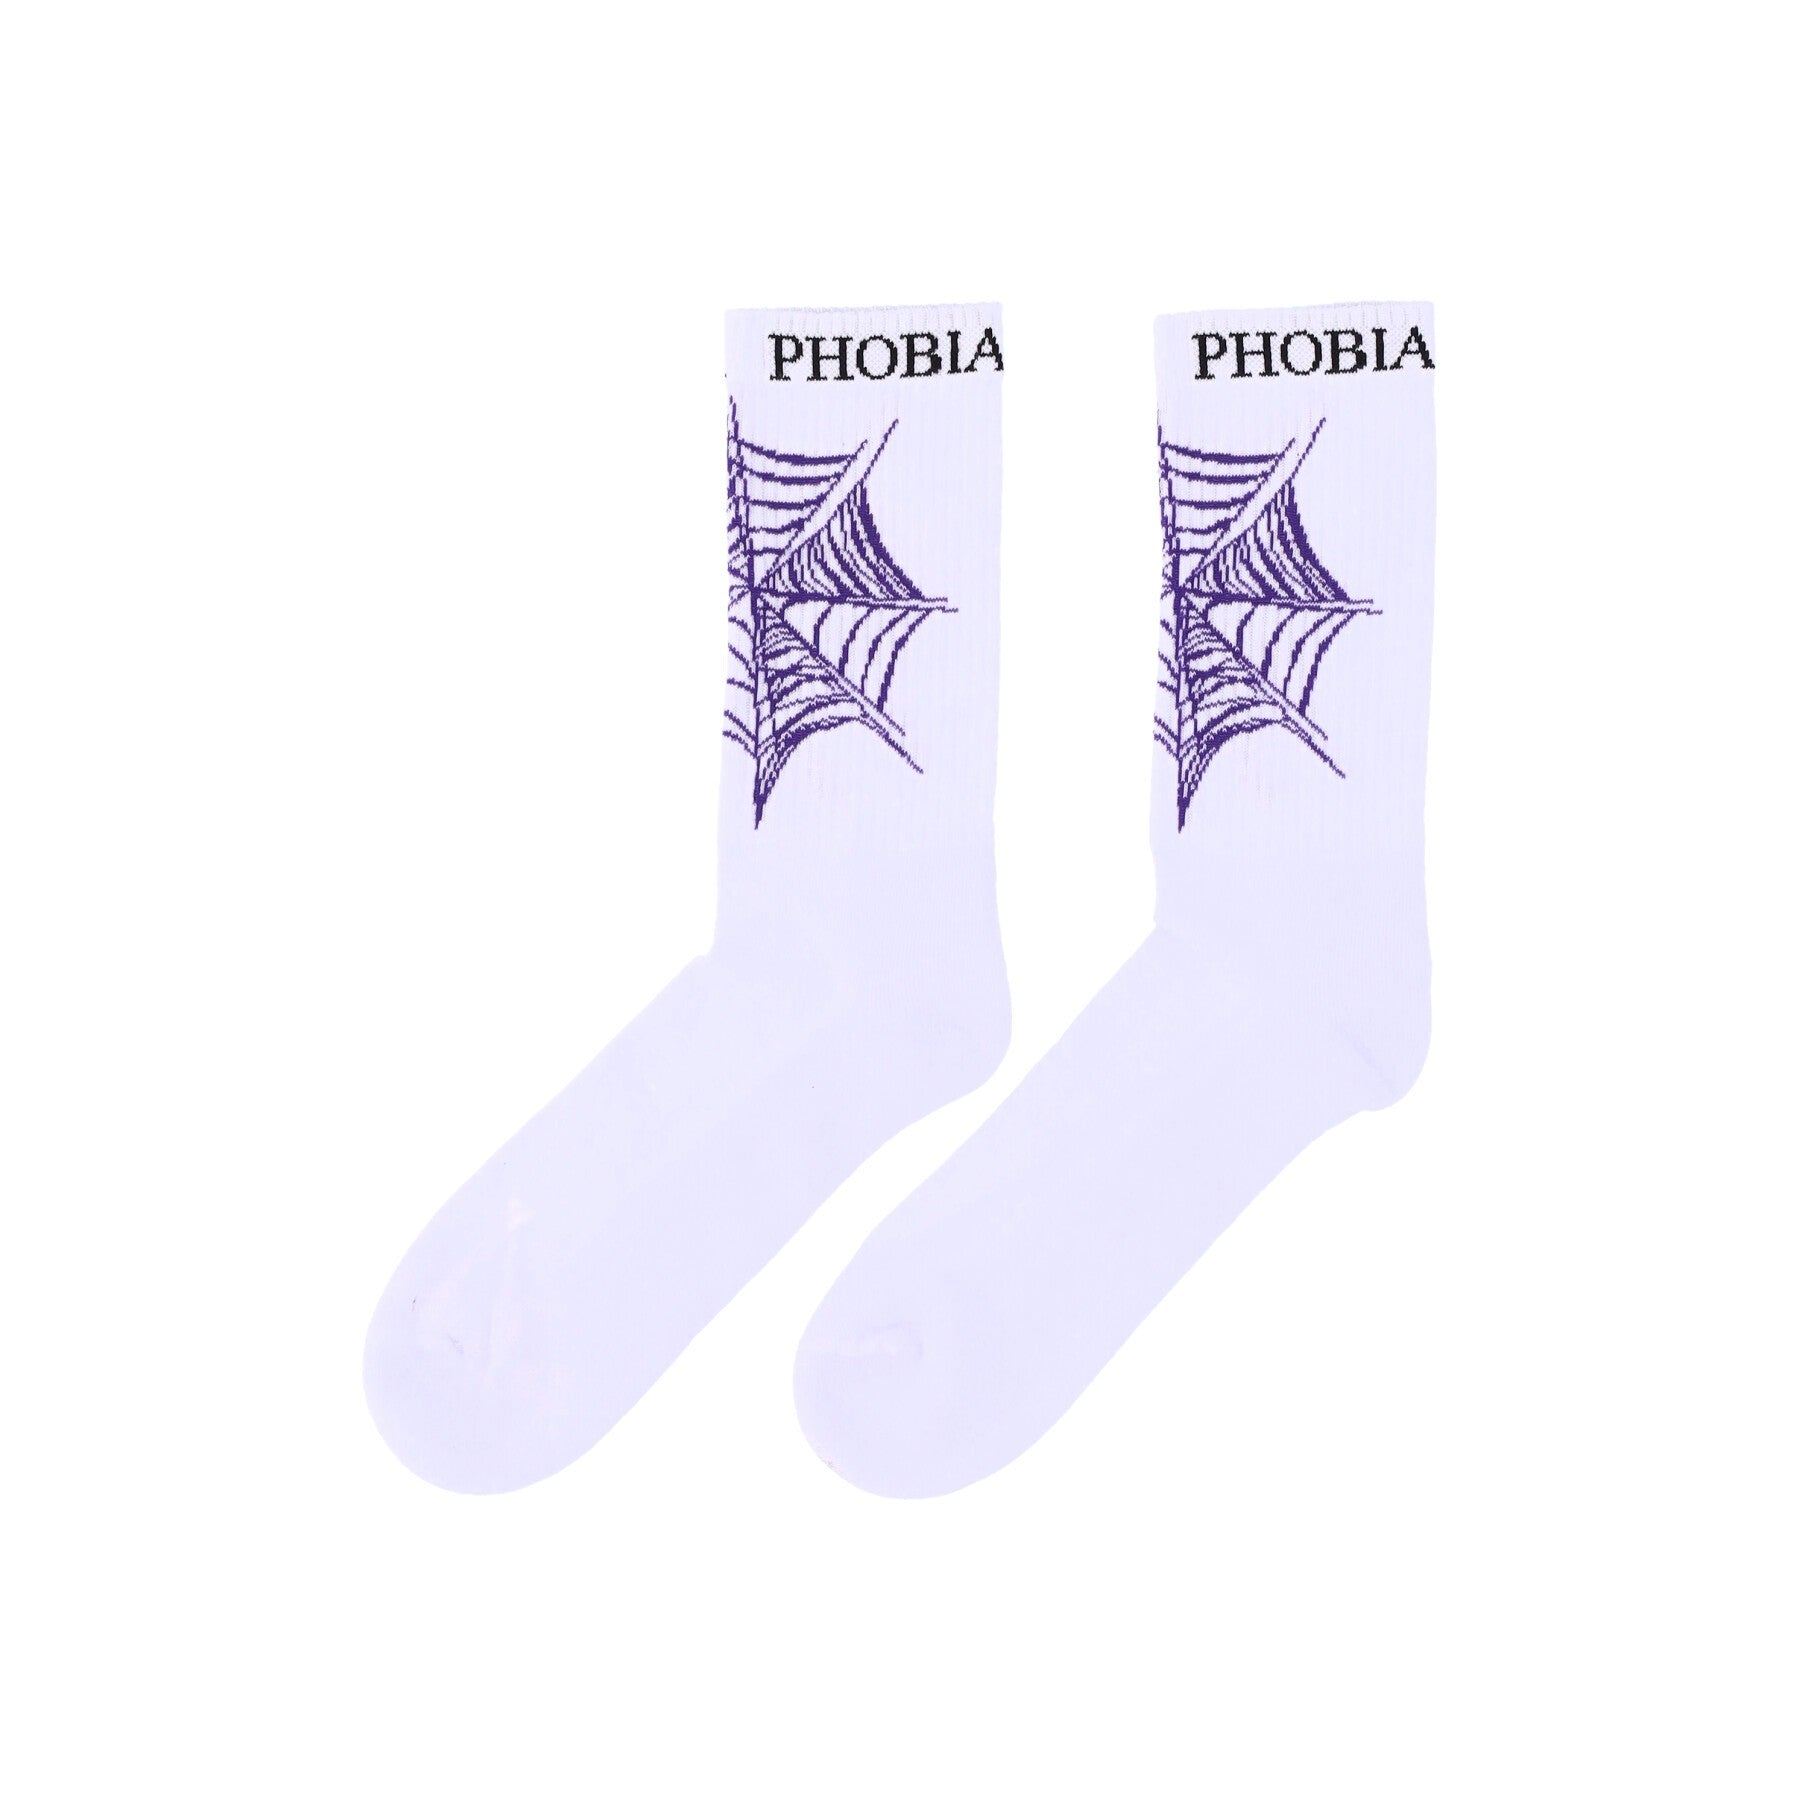 Phobia, Calza Media Uomo Cobweb Print Socks, White/purple